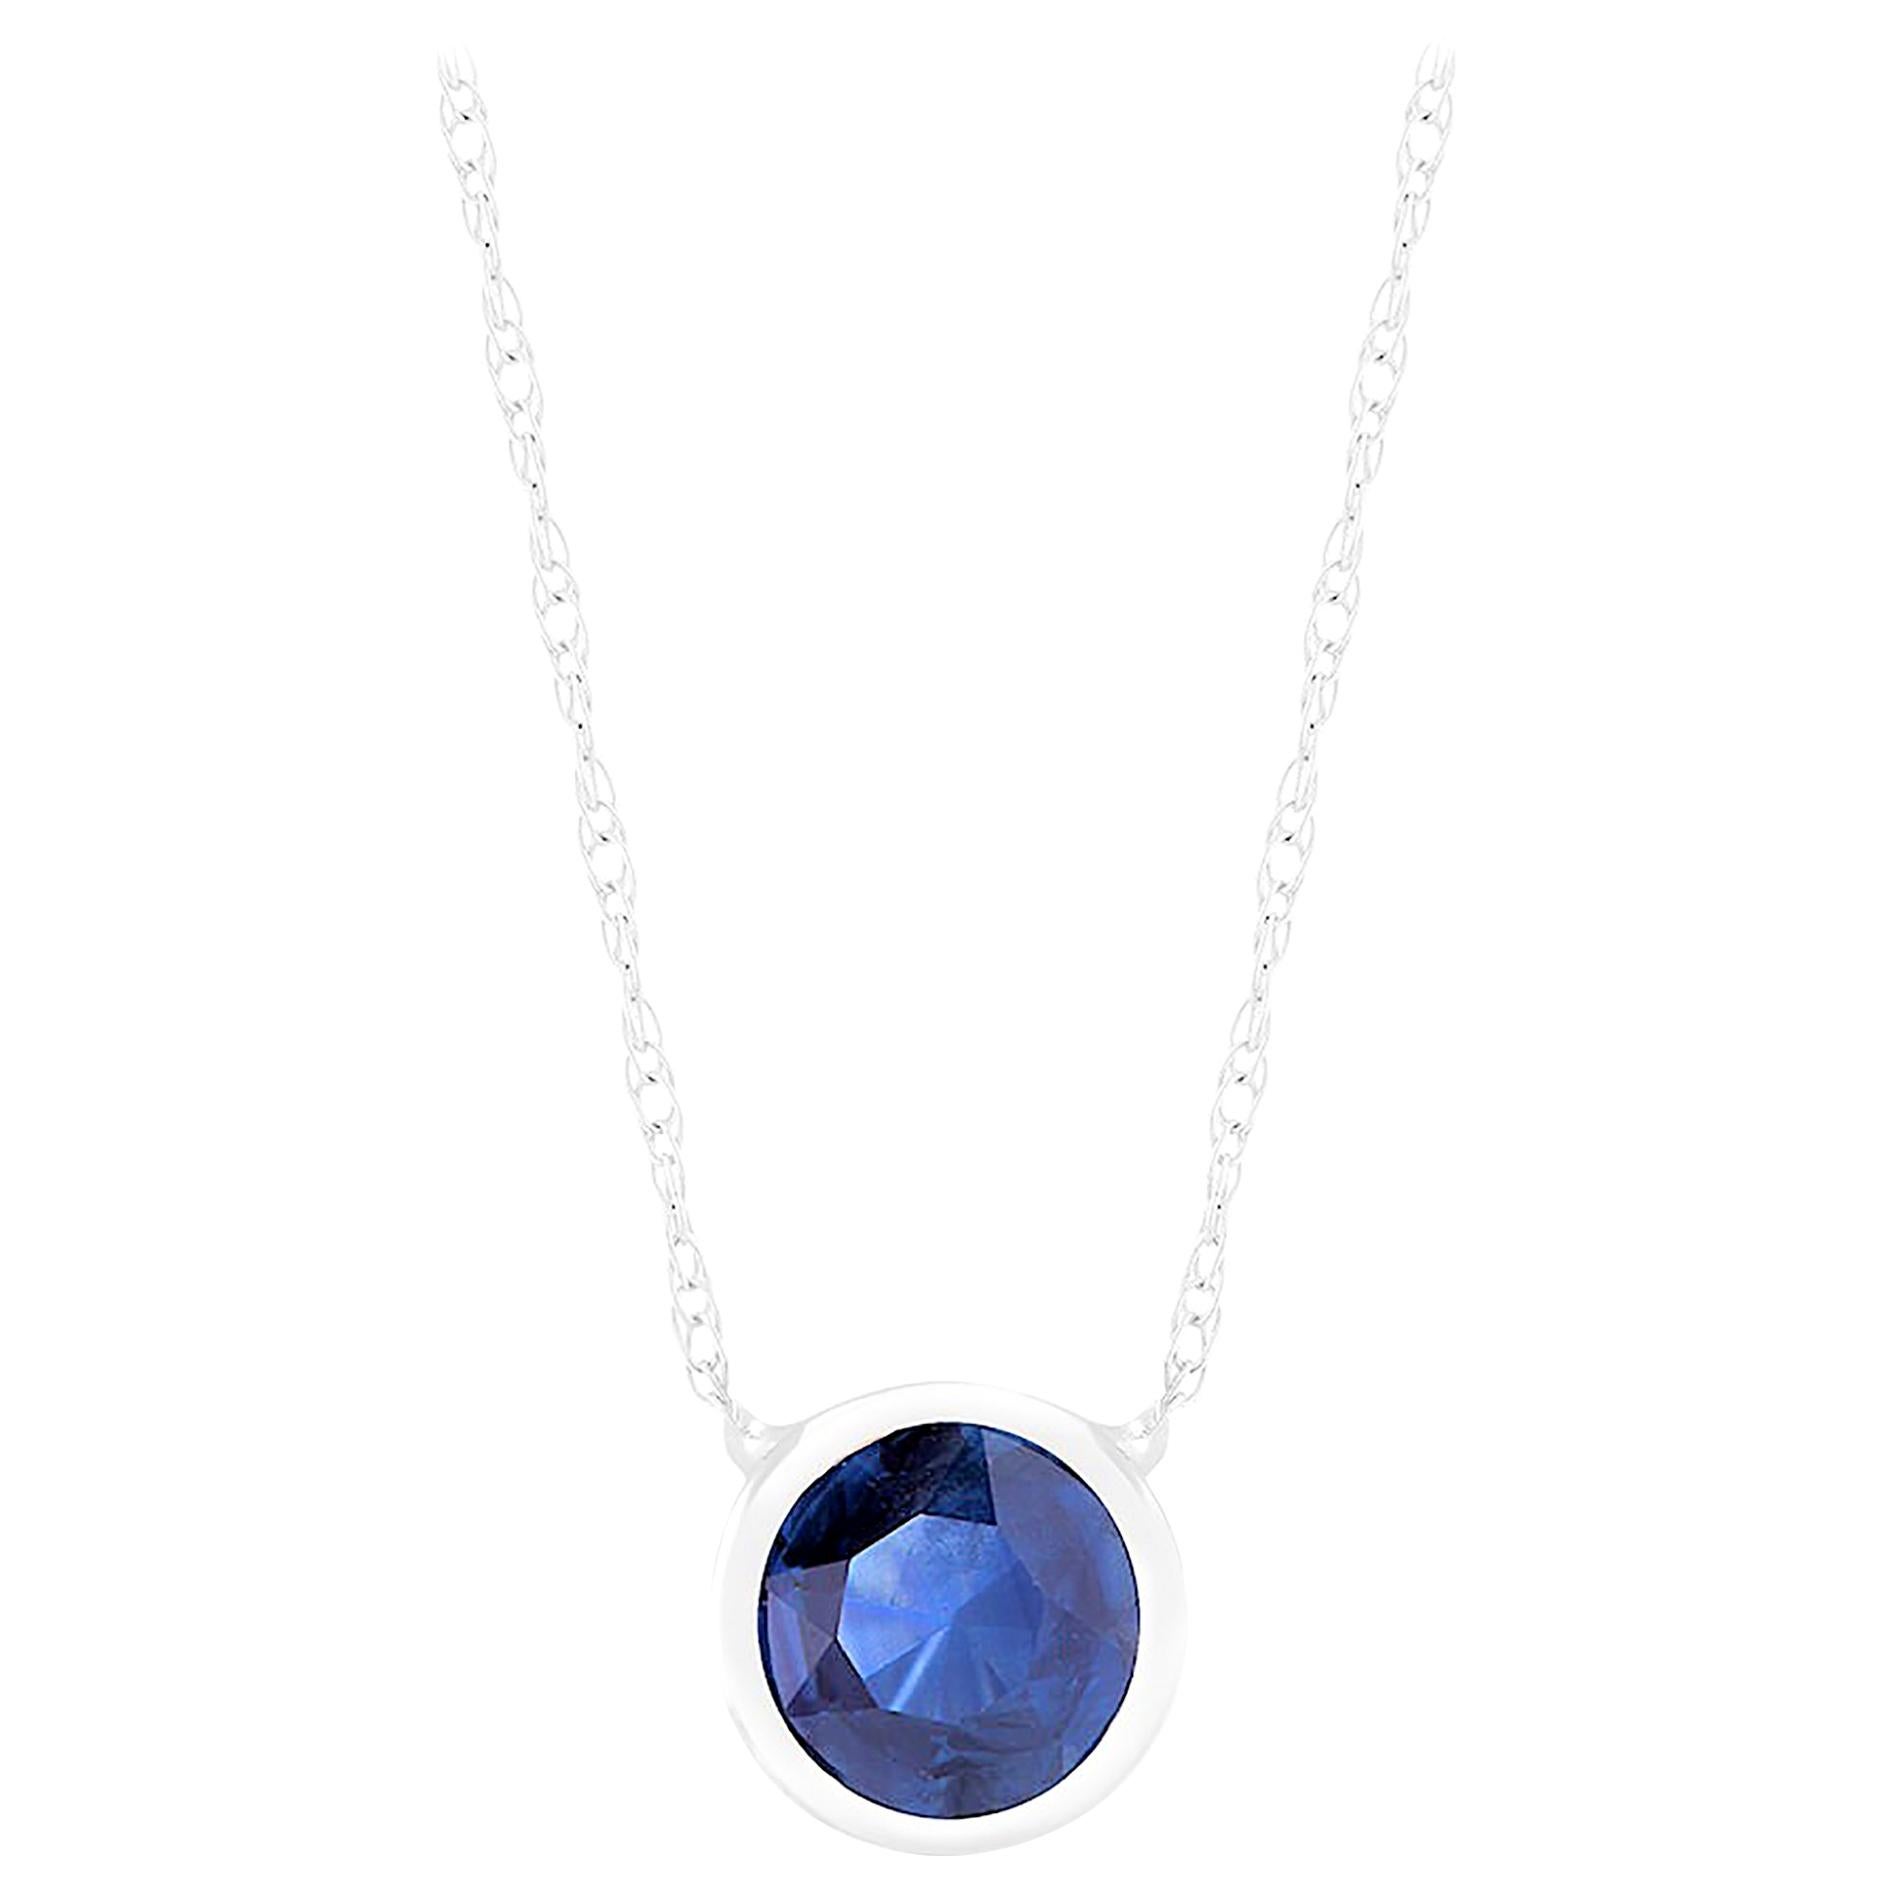 White Gold Bezel-Set Sapphire Pendant Necklace Weighing 1.25 Carat